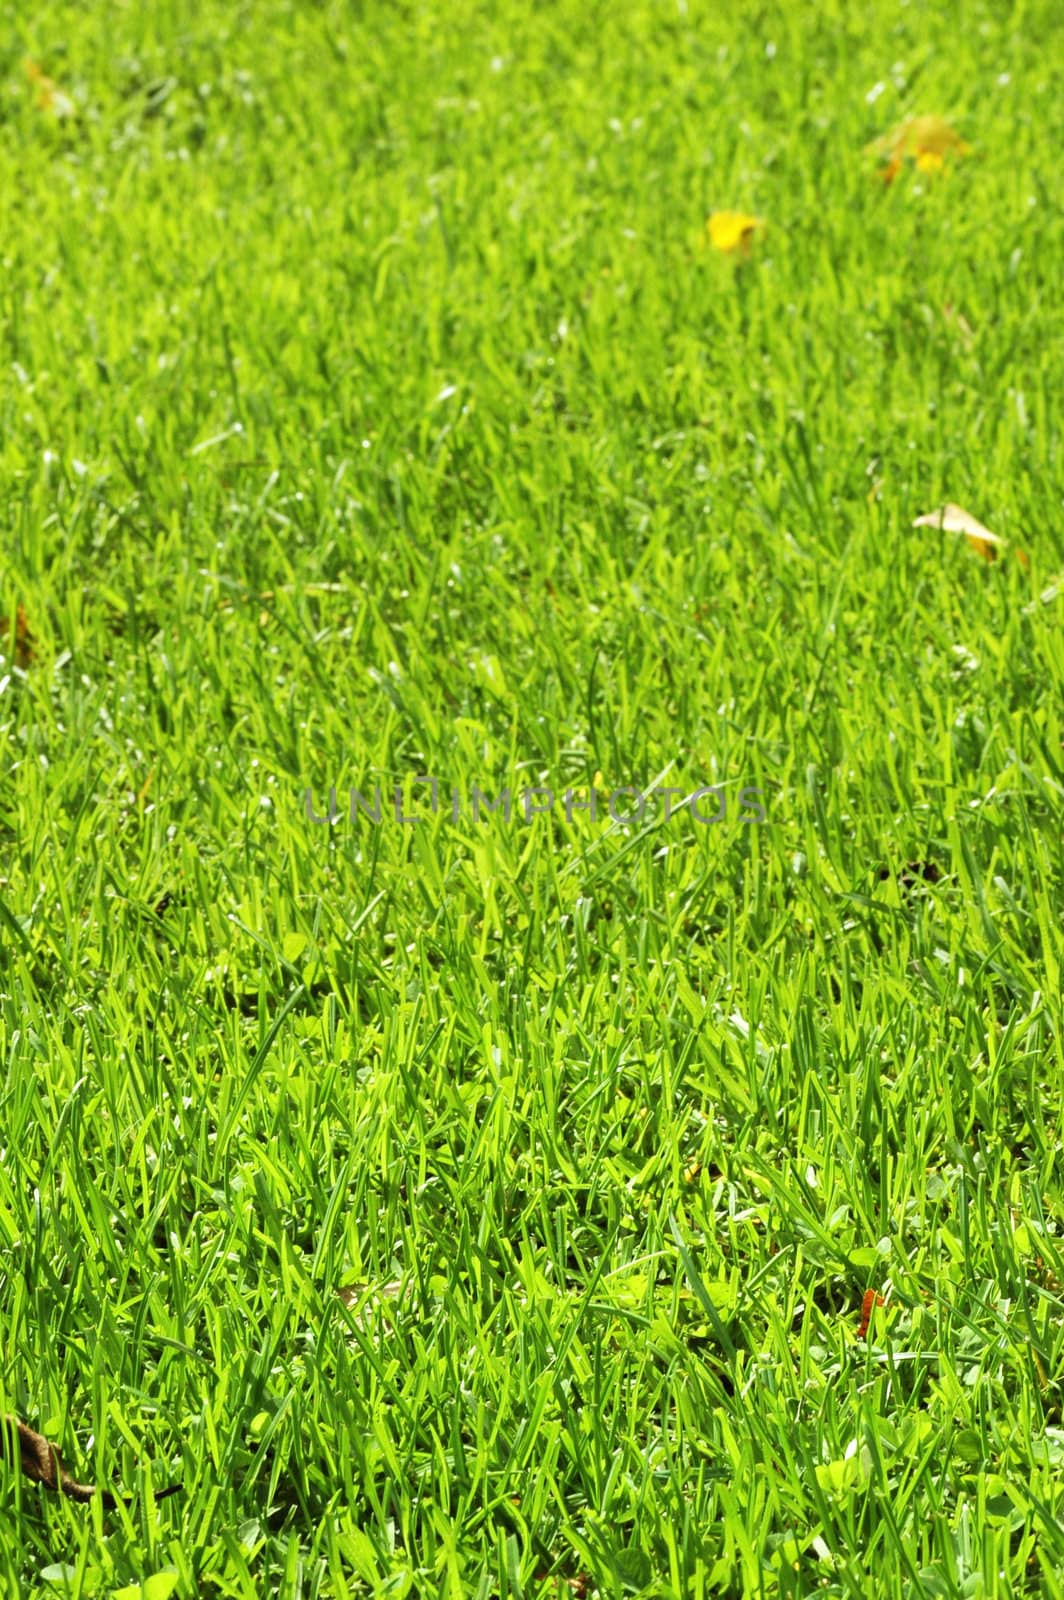 Green Grass Field by khwi